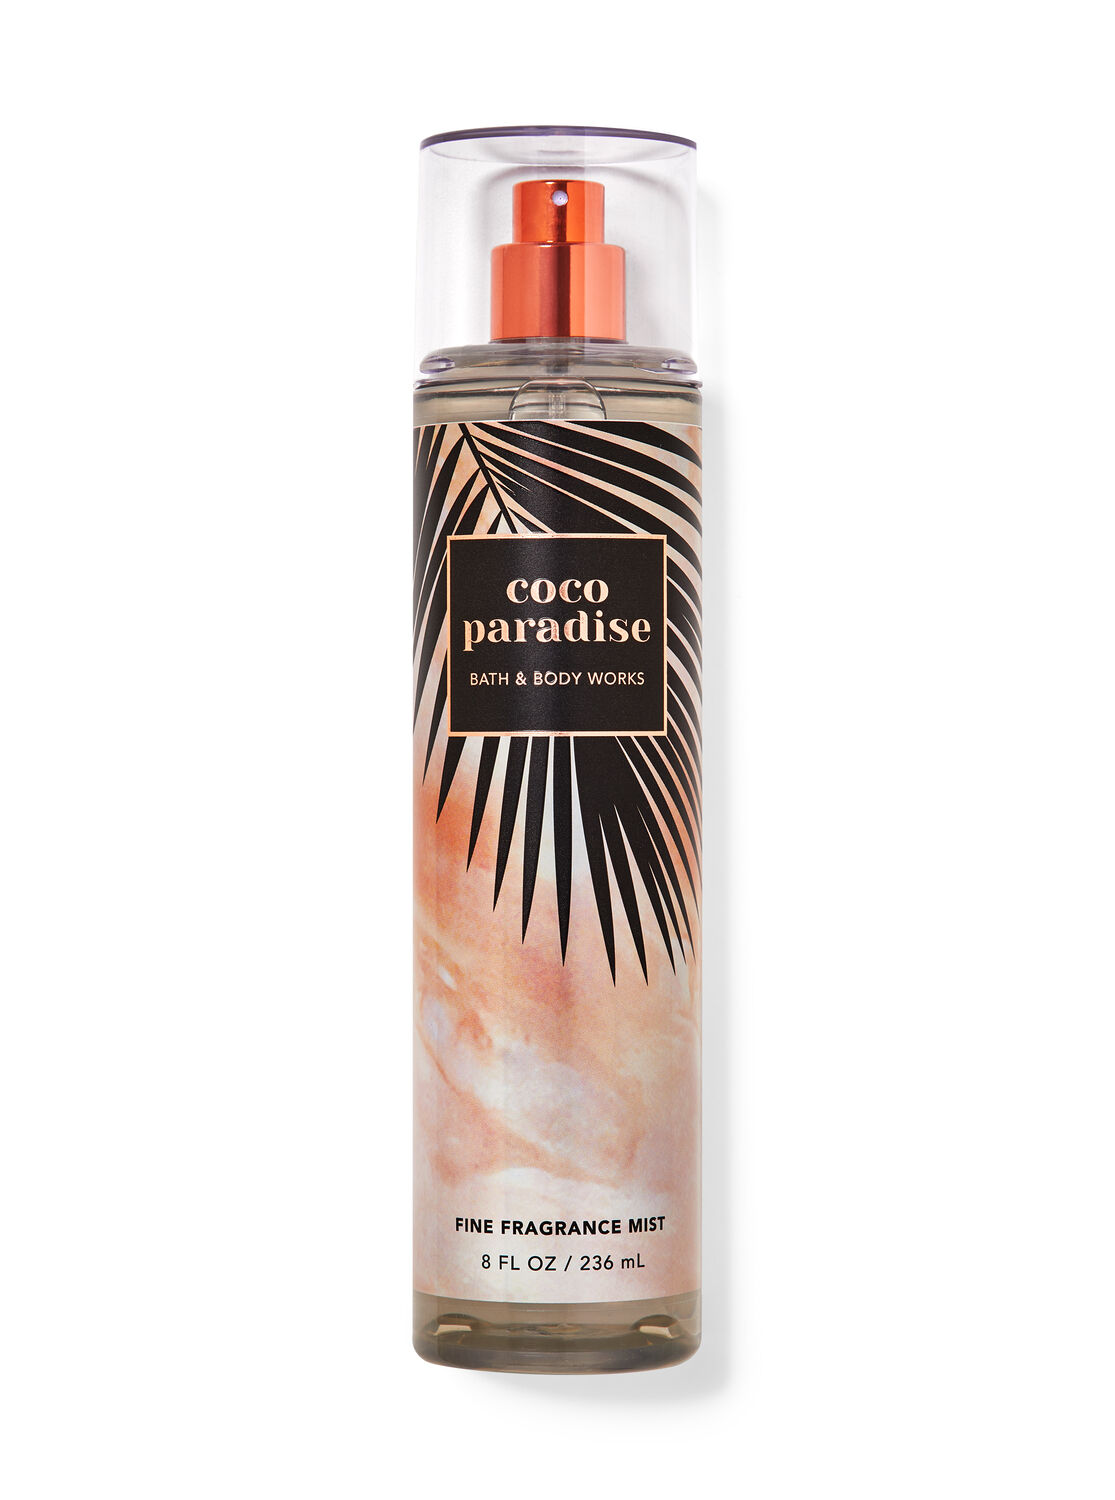  Bouquet Garni Body Spray Tropical Peach - Vitamin E Long  Lasting Deep Moisturizing Fragrance Mist for Women - Citrus Acid Removing  Dead Skin Cells - Low Irritation with Safe Ingredients 